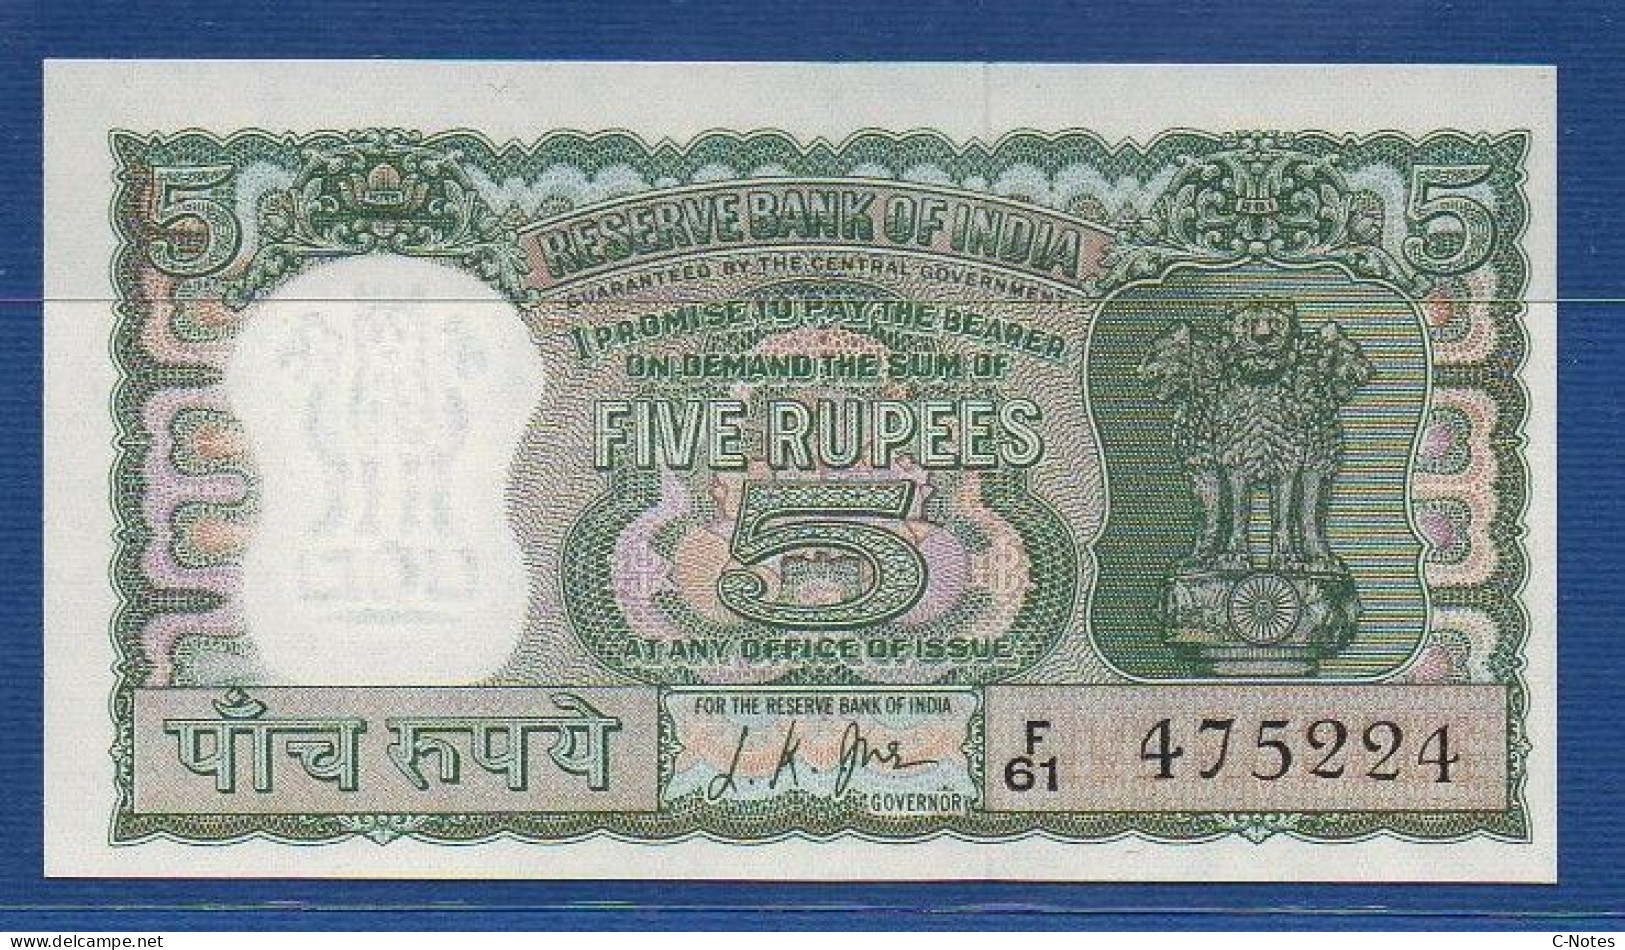 INDIA - P. 54b – 5 Rupees ND, UNC,  Serie F61 475224 - Signature: L. K. Jha (1967-1970) - Inde